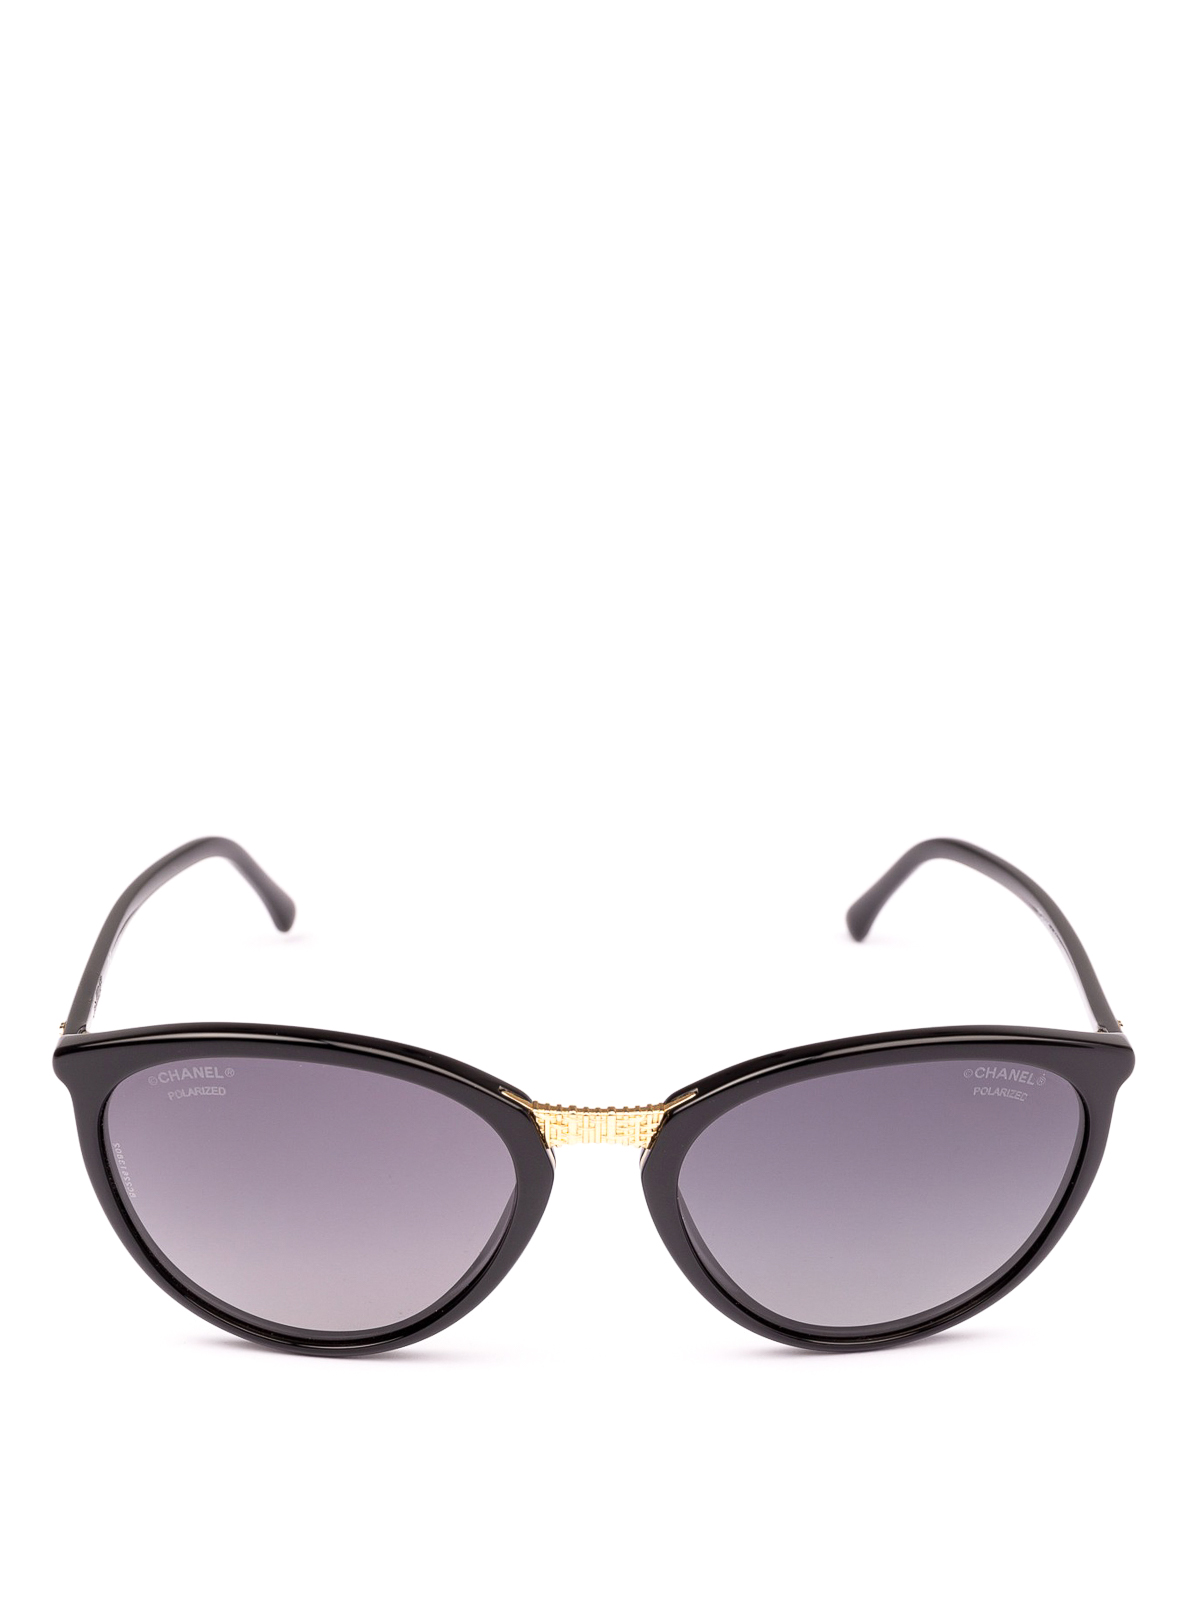 Sunglasses Chanel - Black butterfly sunglasses with golden bridge